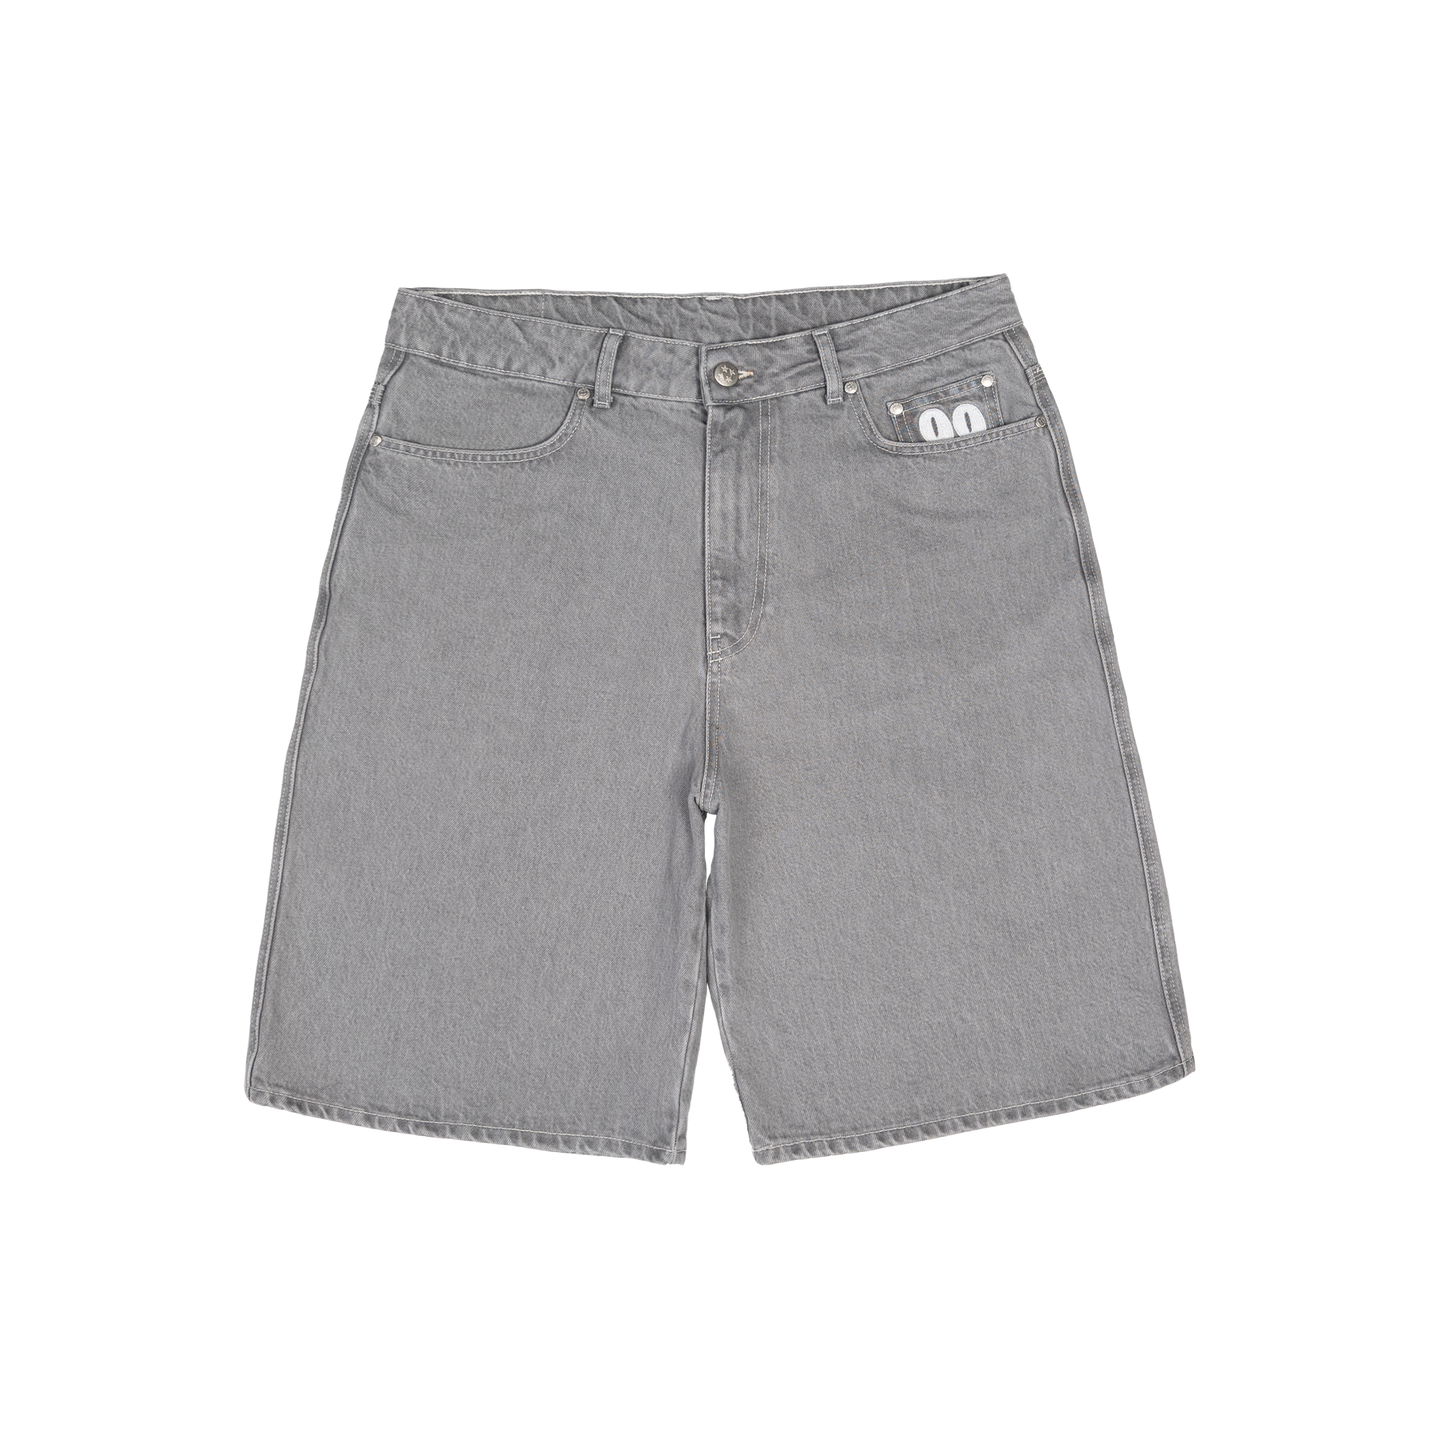 Finesse Based Denim Shorts [Light Grey]